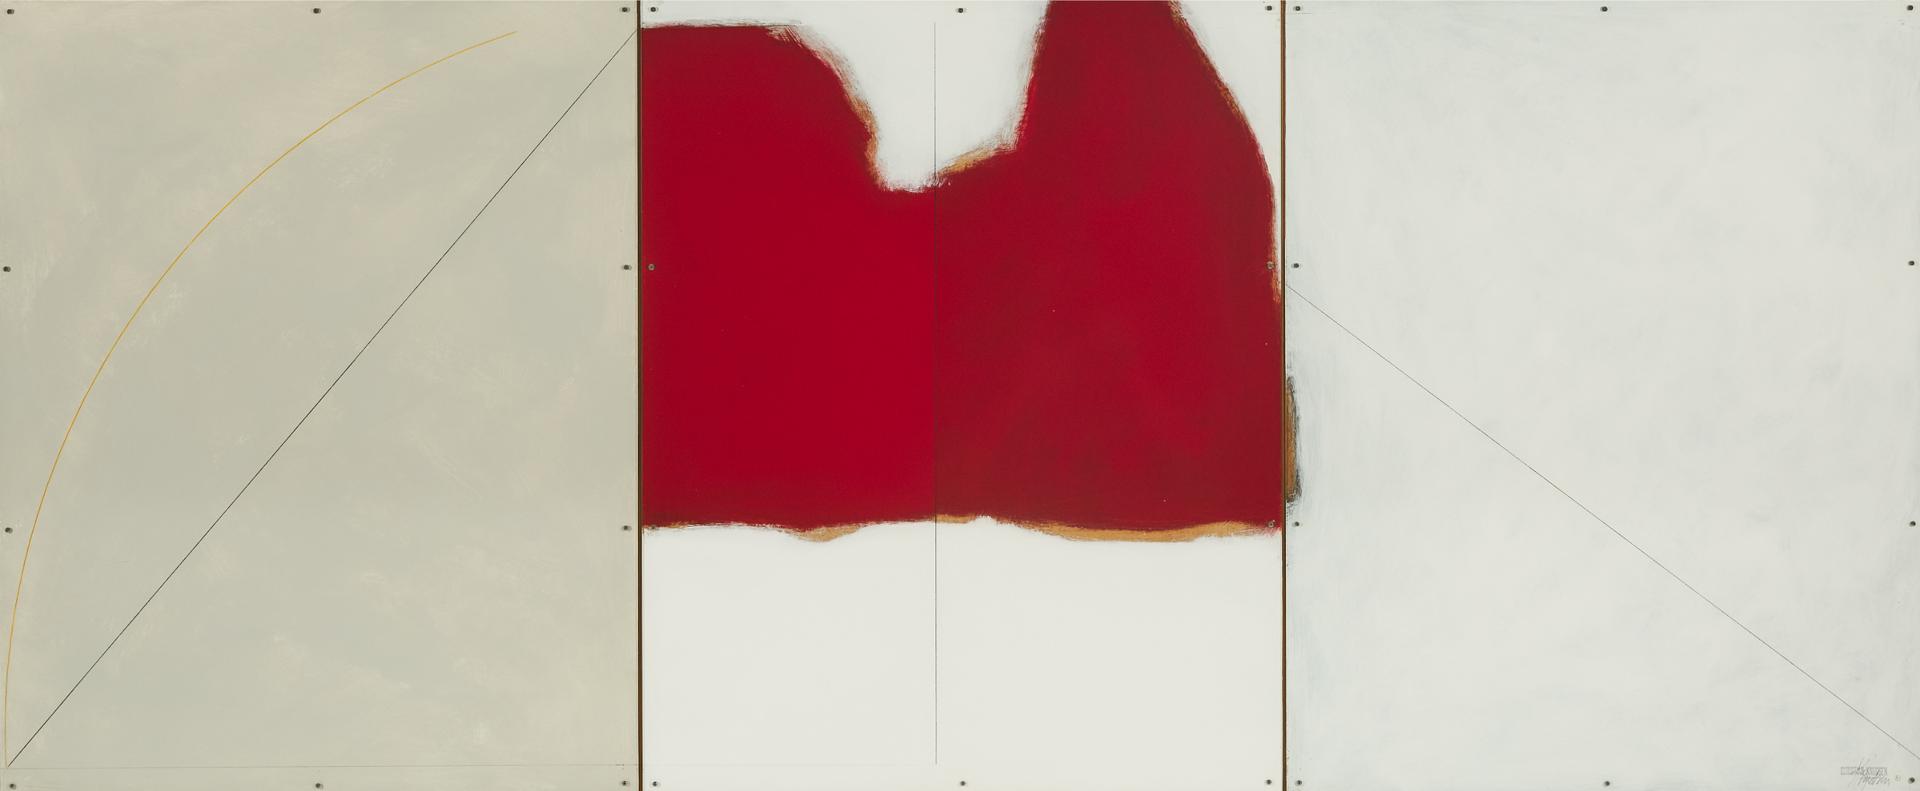 Christian Knudsen (1945) - Center Red (Small Version), 1980-1981